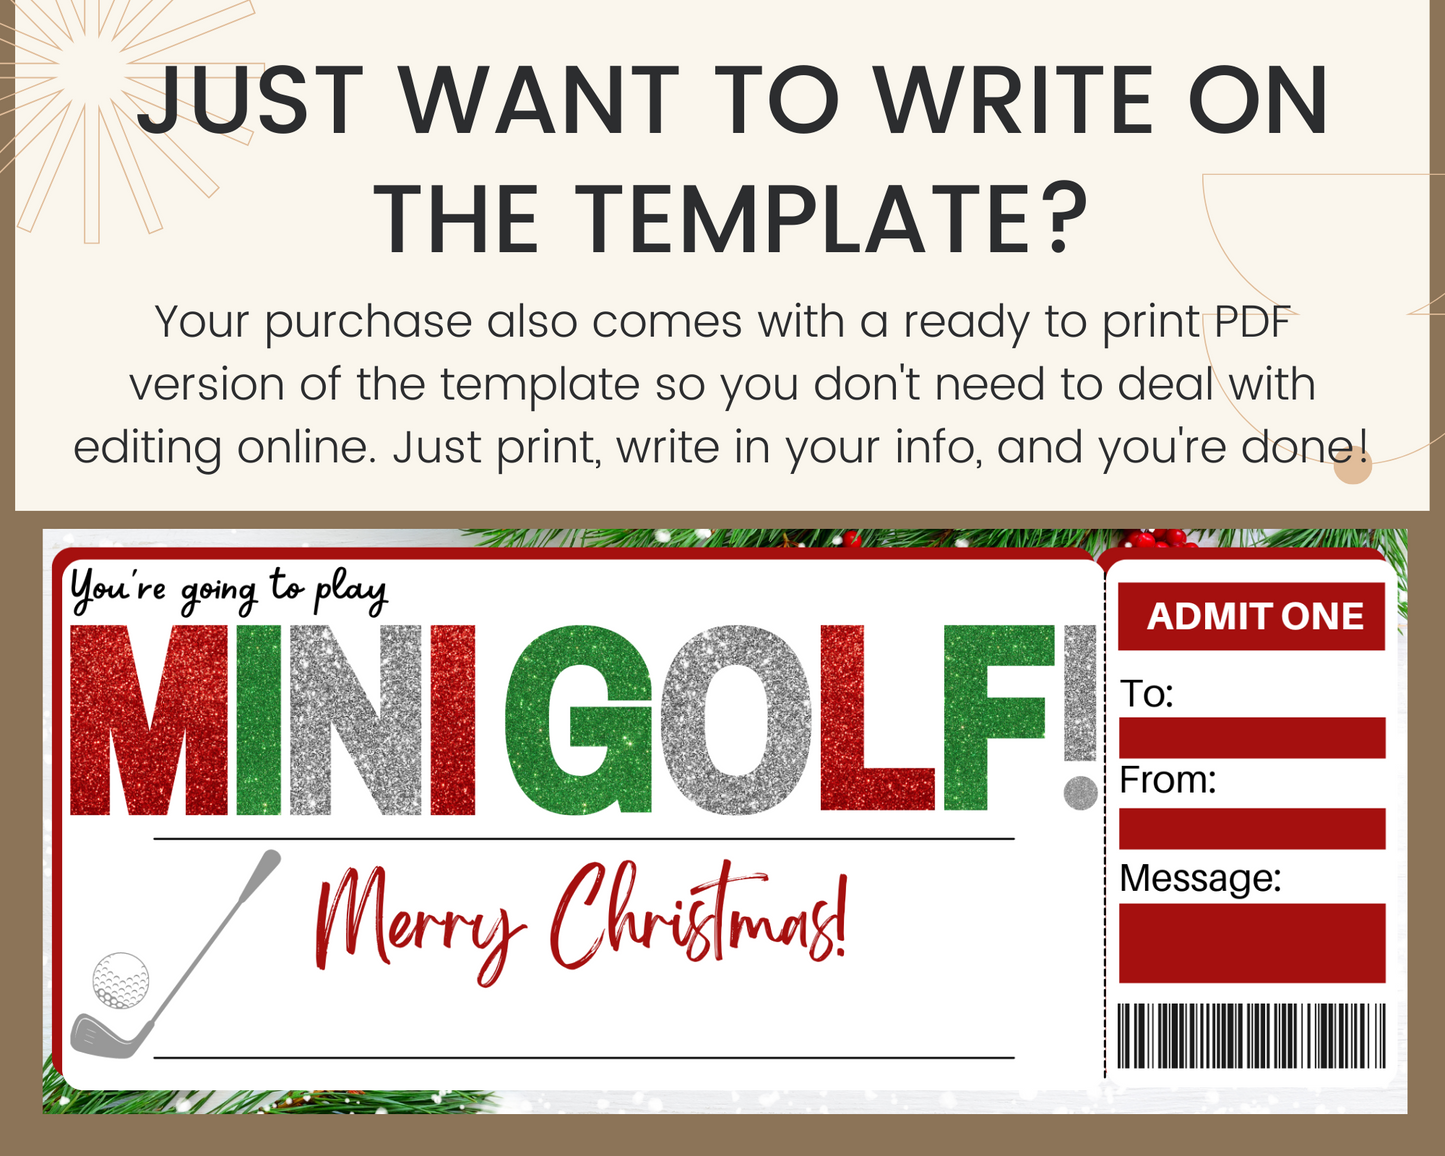 Christmas Mini Golfing Gift Ticket Template